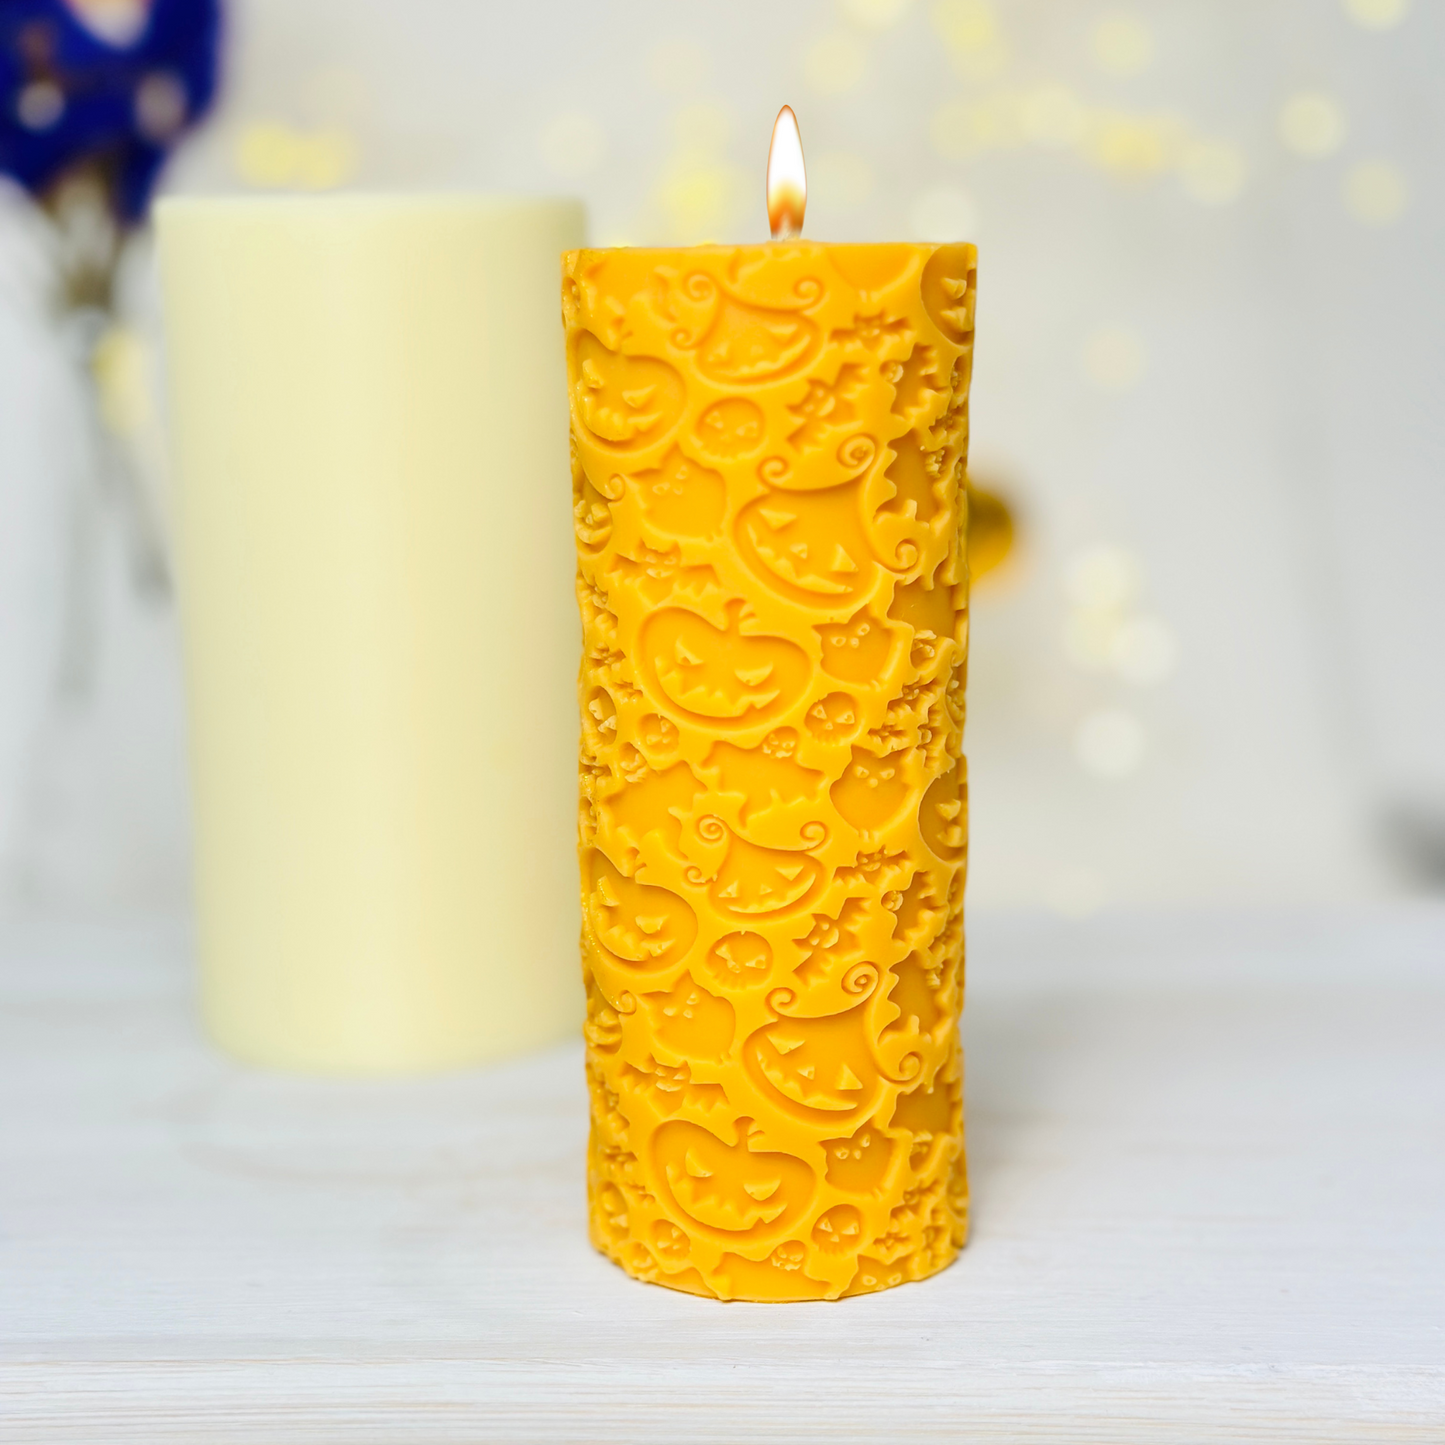 Premium Silicone Candle Mold - Jack-o-Lantern & Bat Design | Create Unique Shaped Candles for Halloween